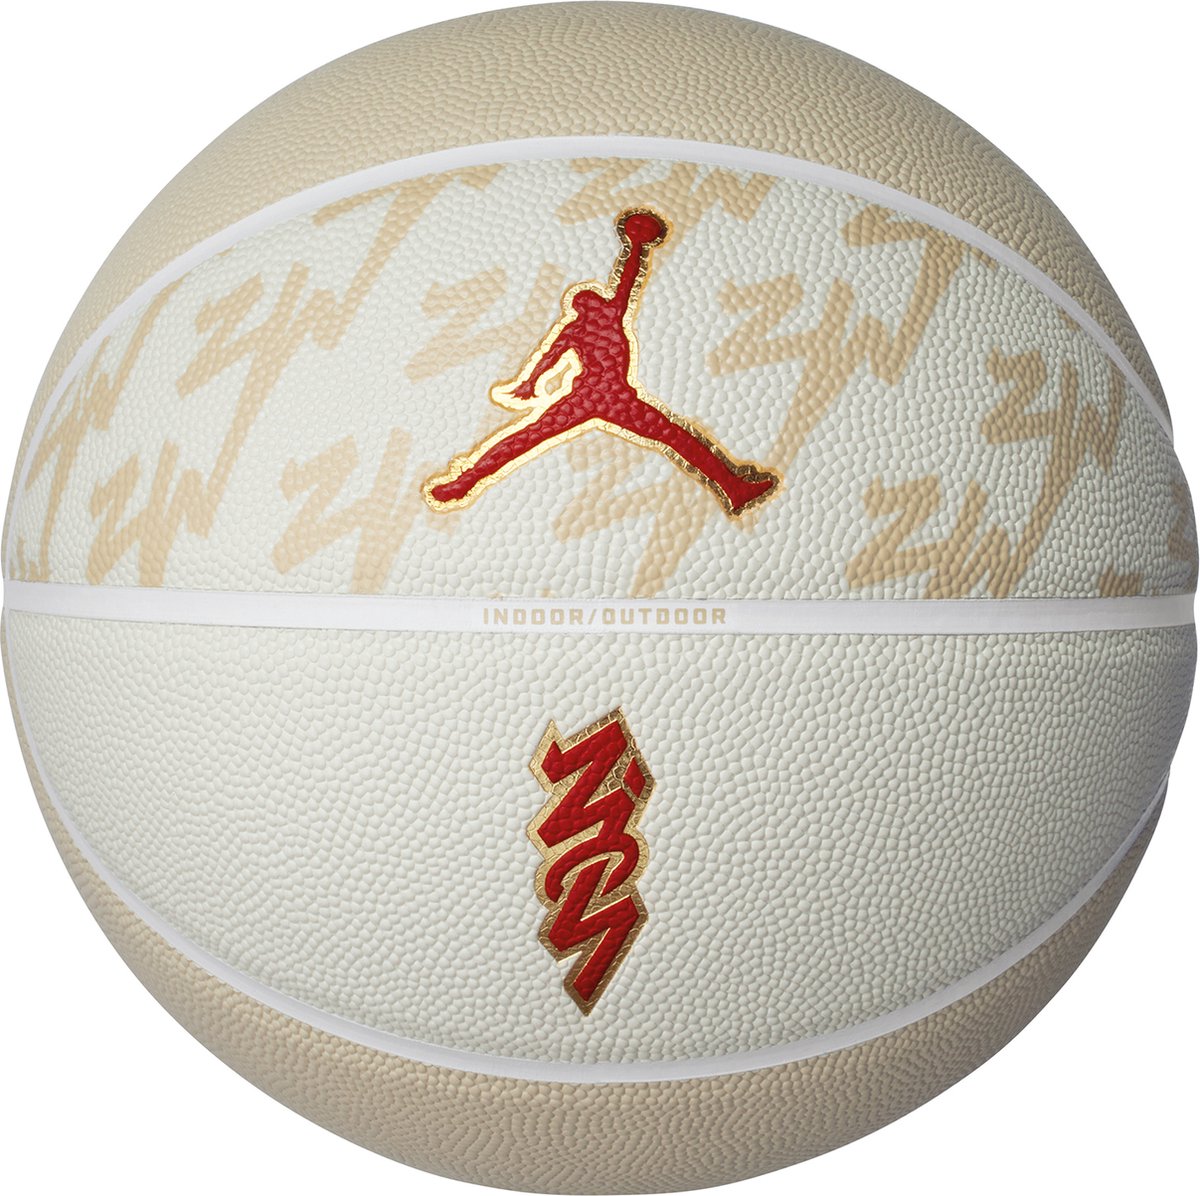 Nike Jordan All Court Basketbal maat 7 Beige-Rood